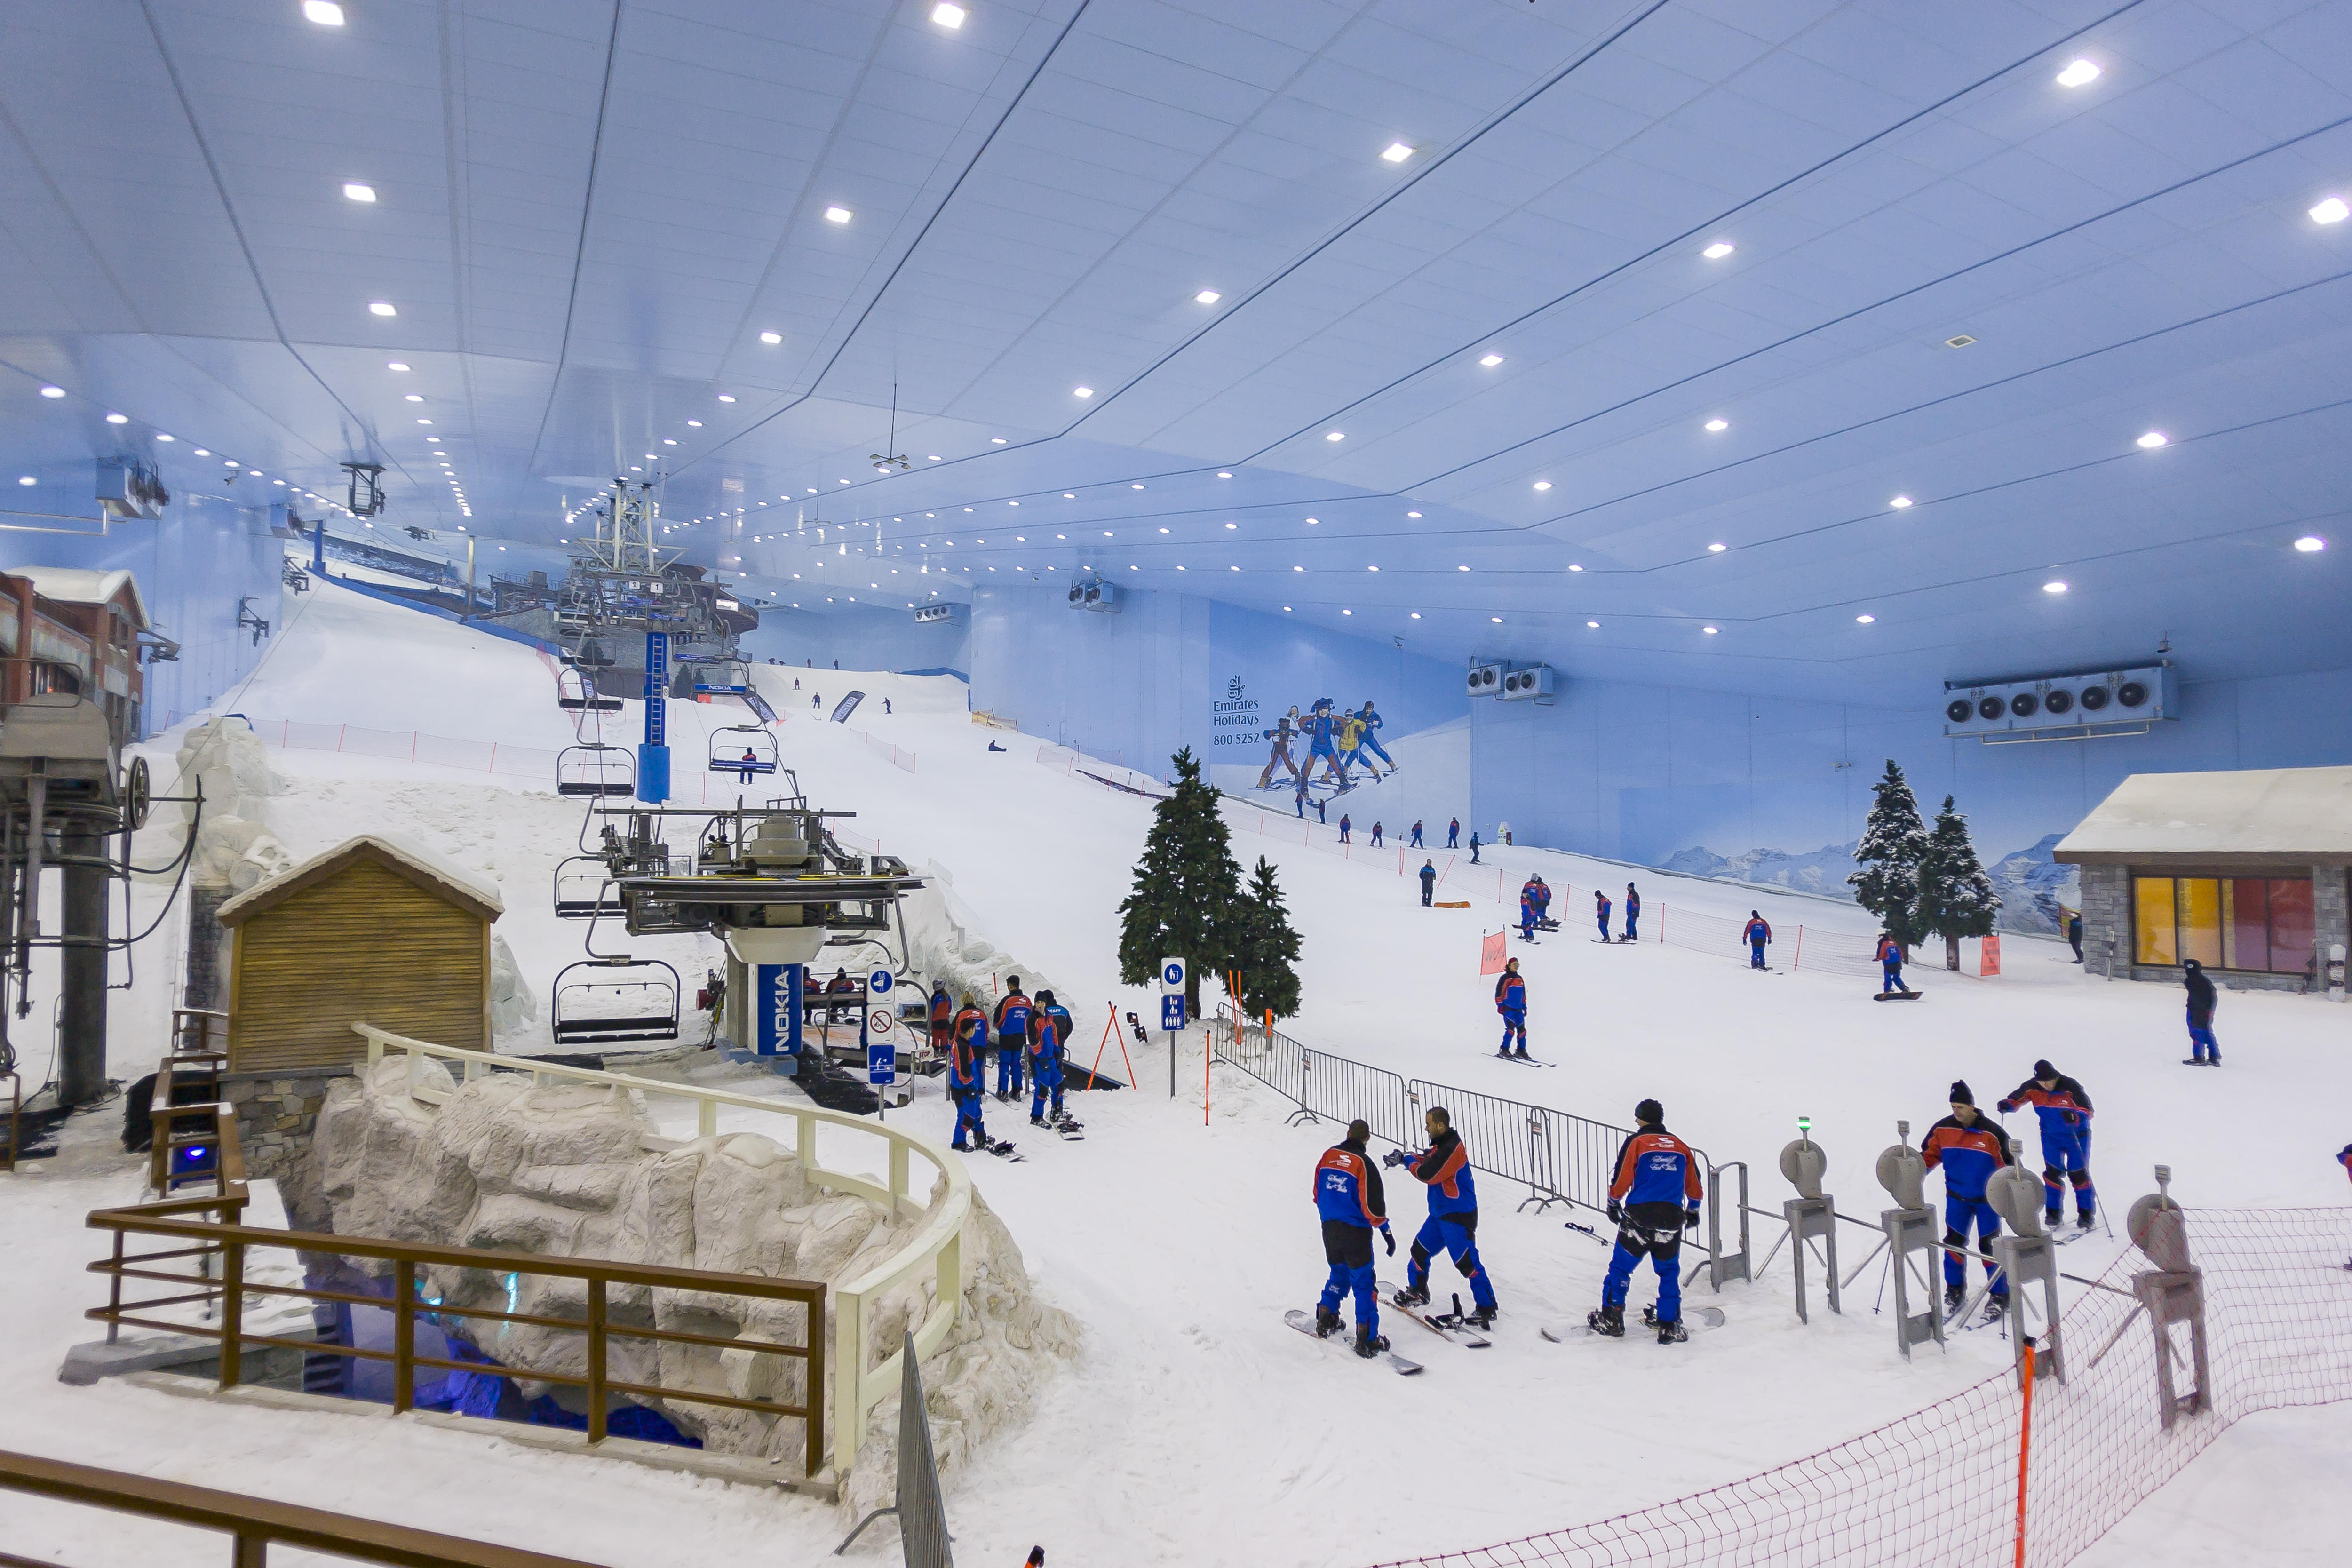 Things to Do at Ski Dubai